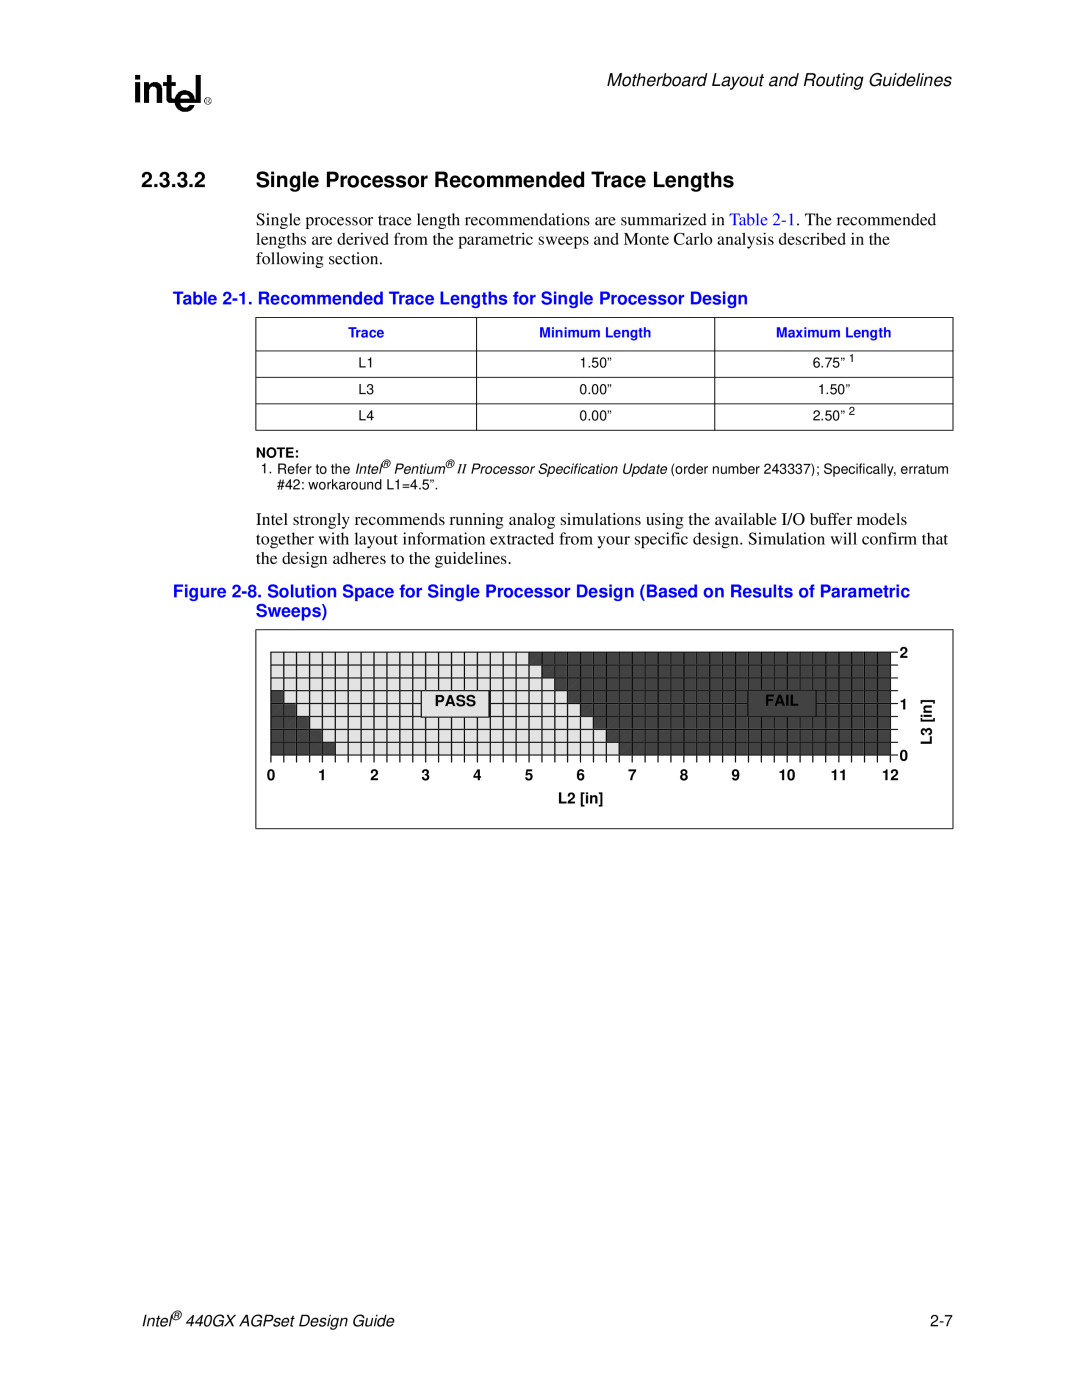 Intel 440GX manual Single Processor Recommended Trace Lengths, 1. Recommended Trace Lengths for Single Processor Design 